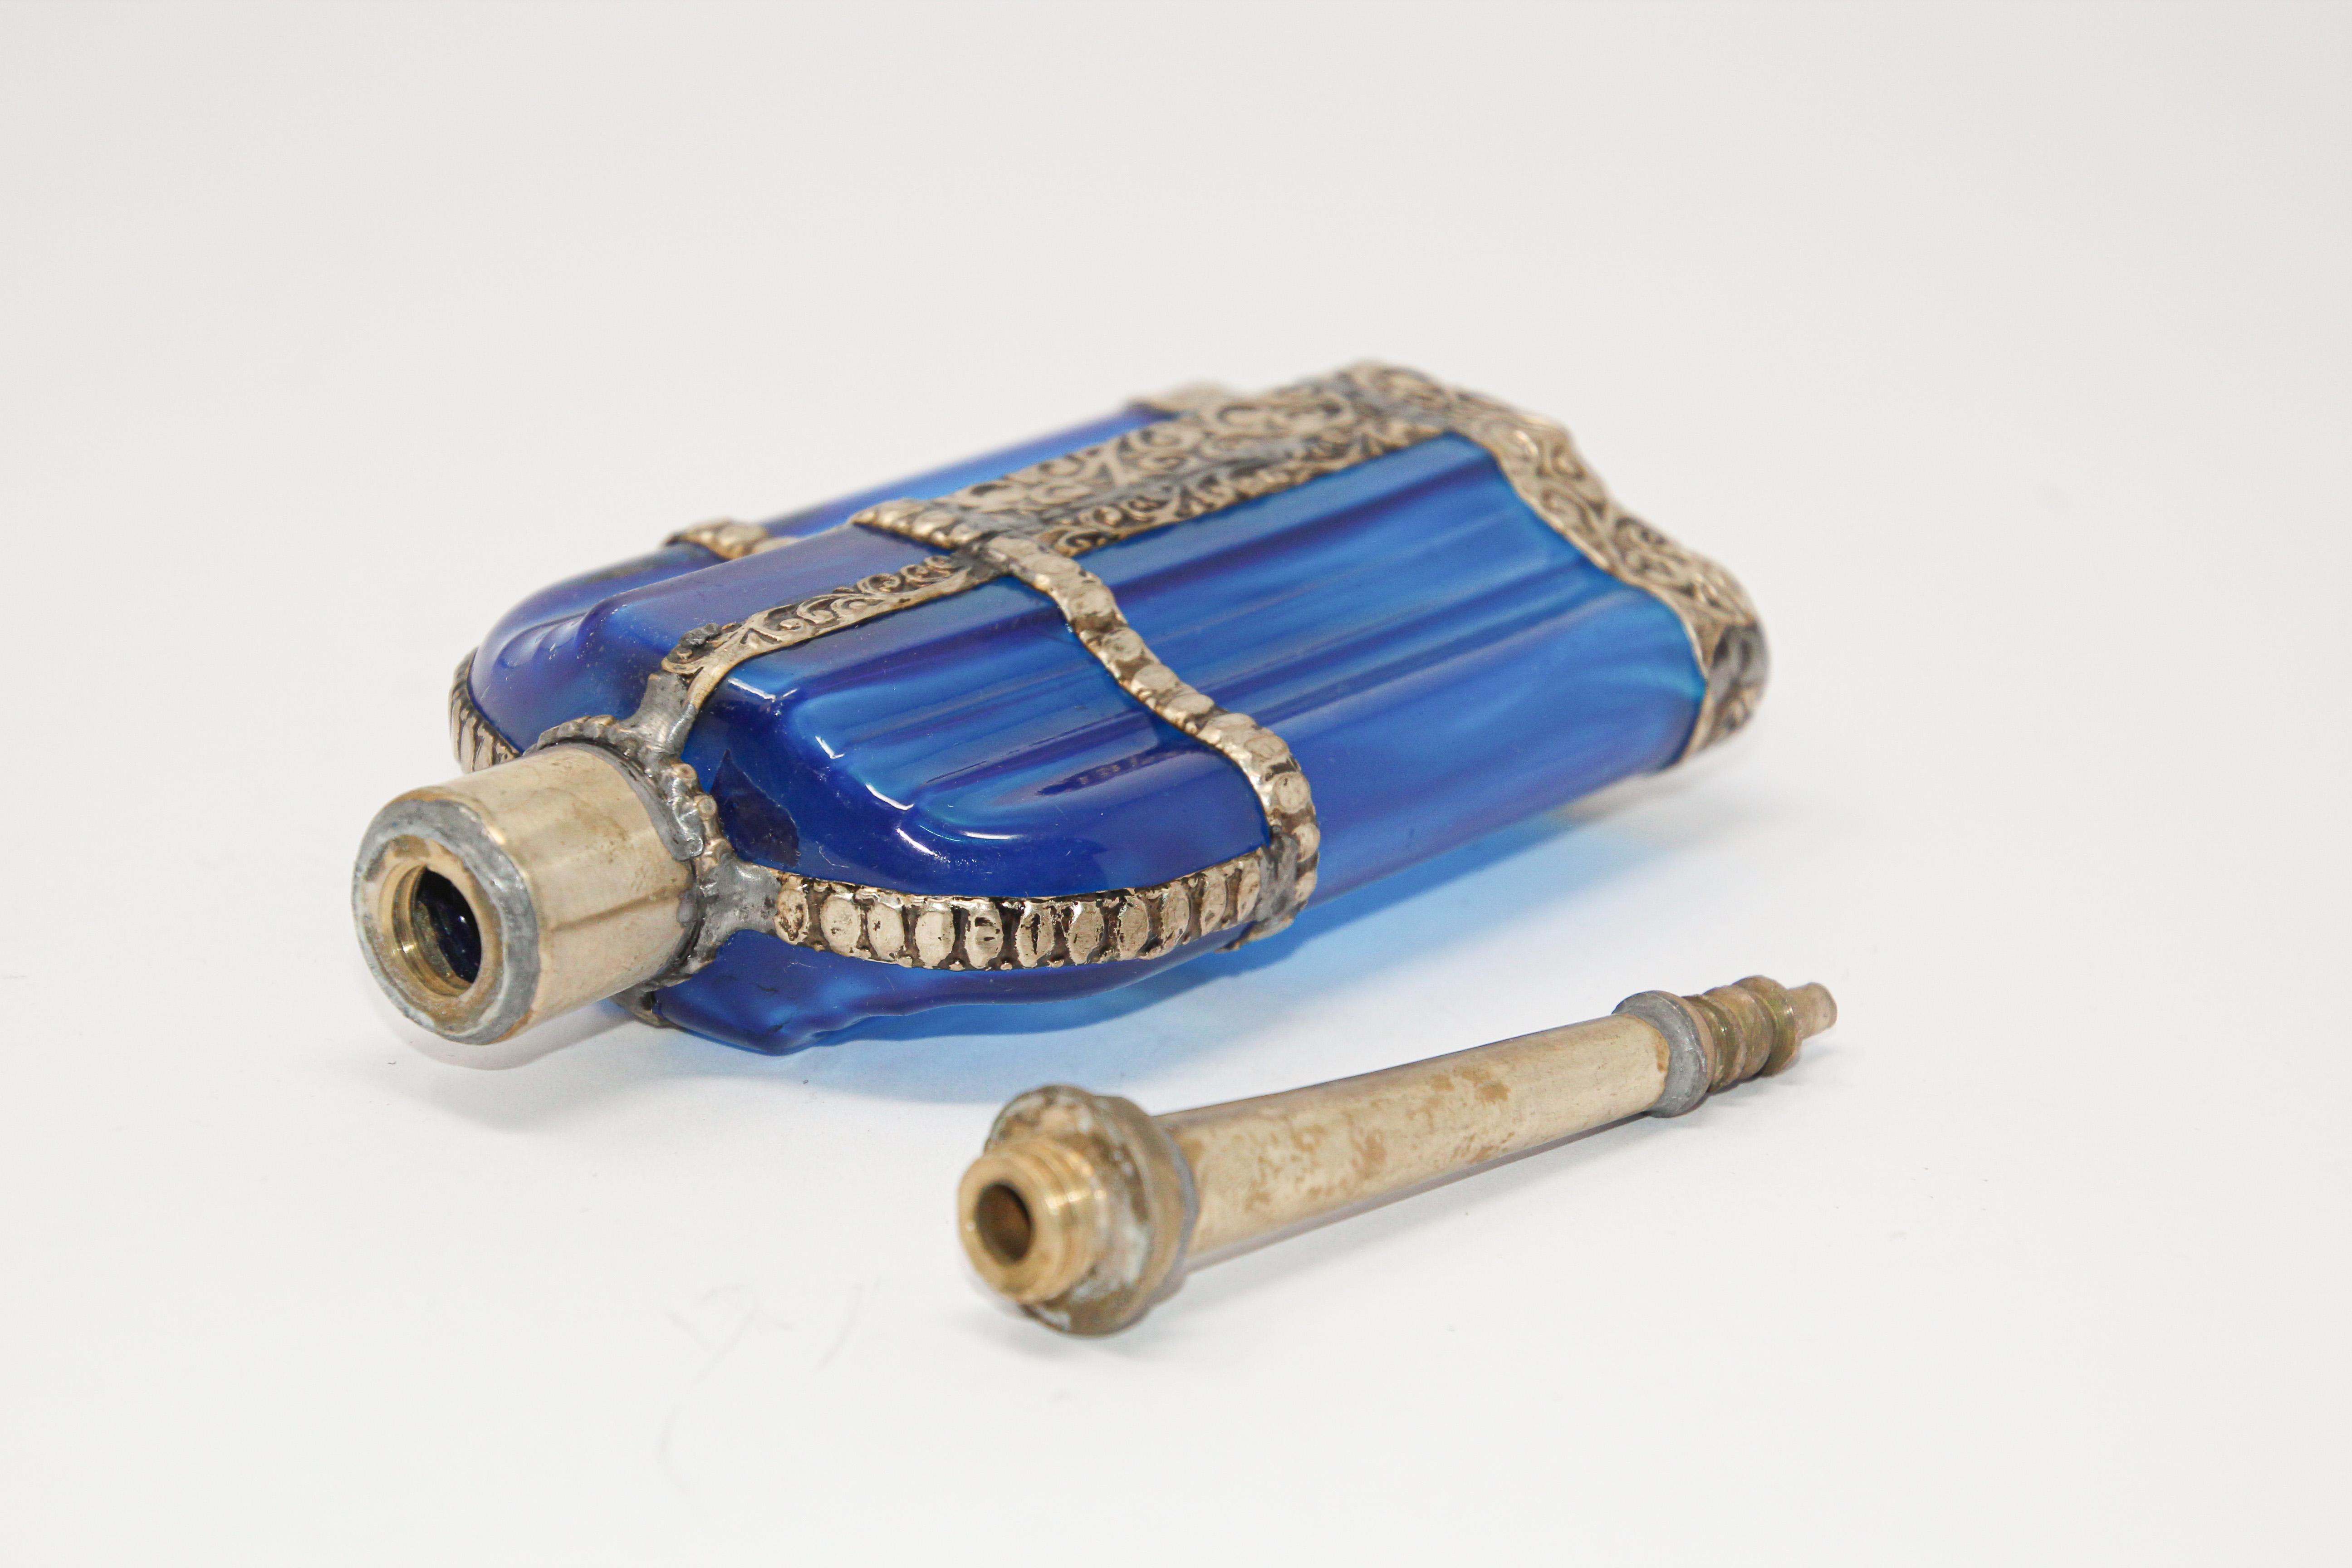 Hand-Crafted Moorish Blue Glass Perfume Bottle Sprinkler with Embossed Metal Overlay